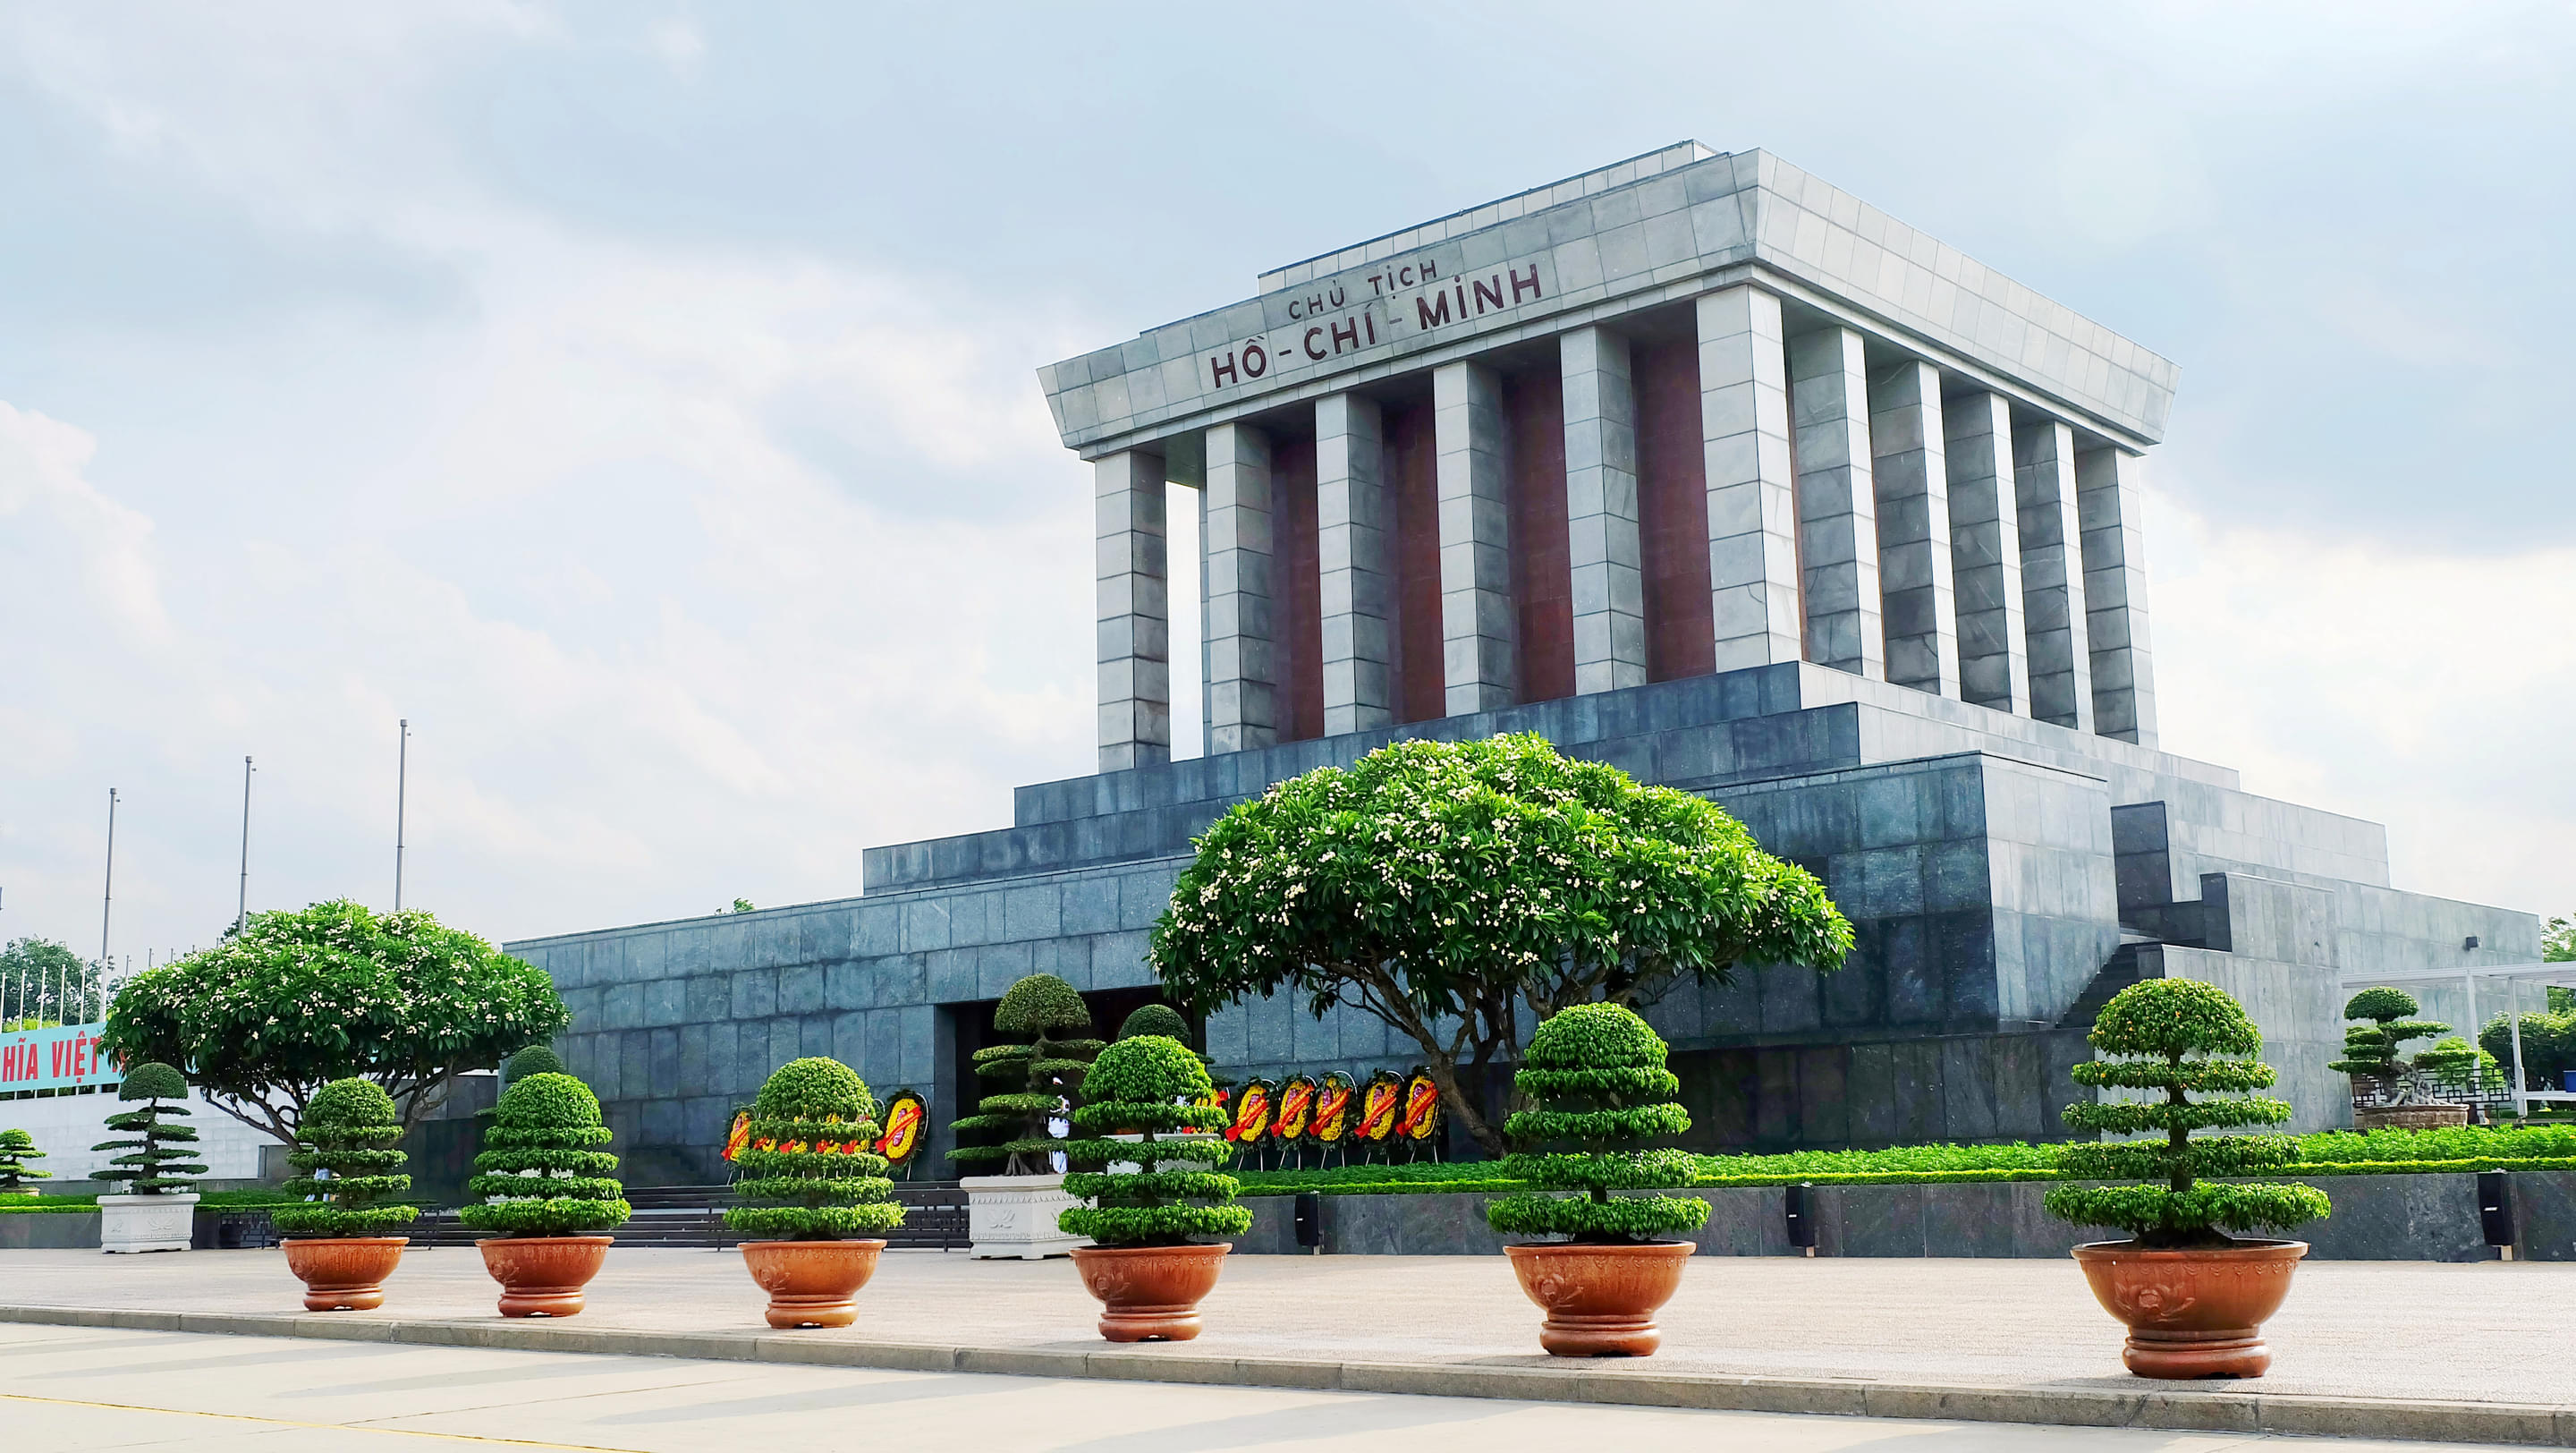 Ho Chi Minh Mausoleum Overview